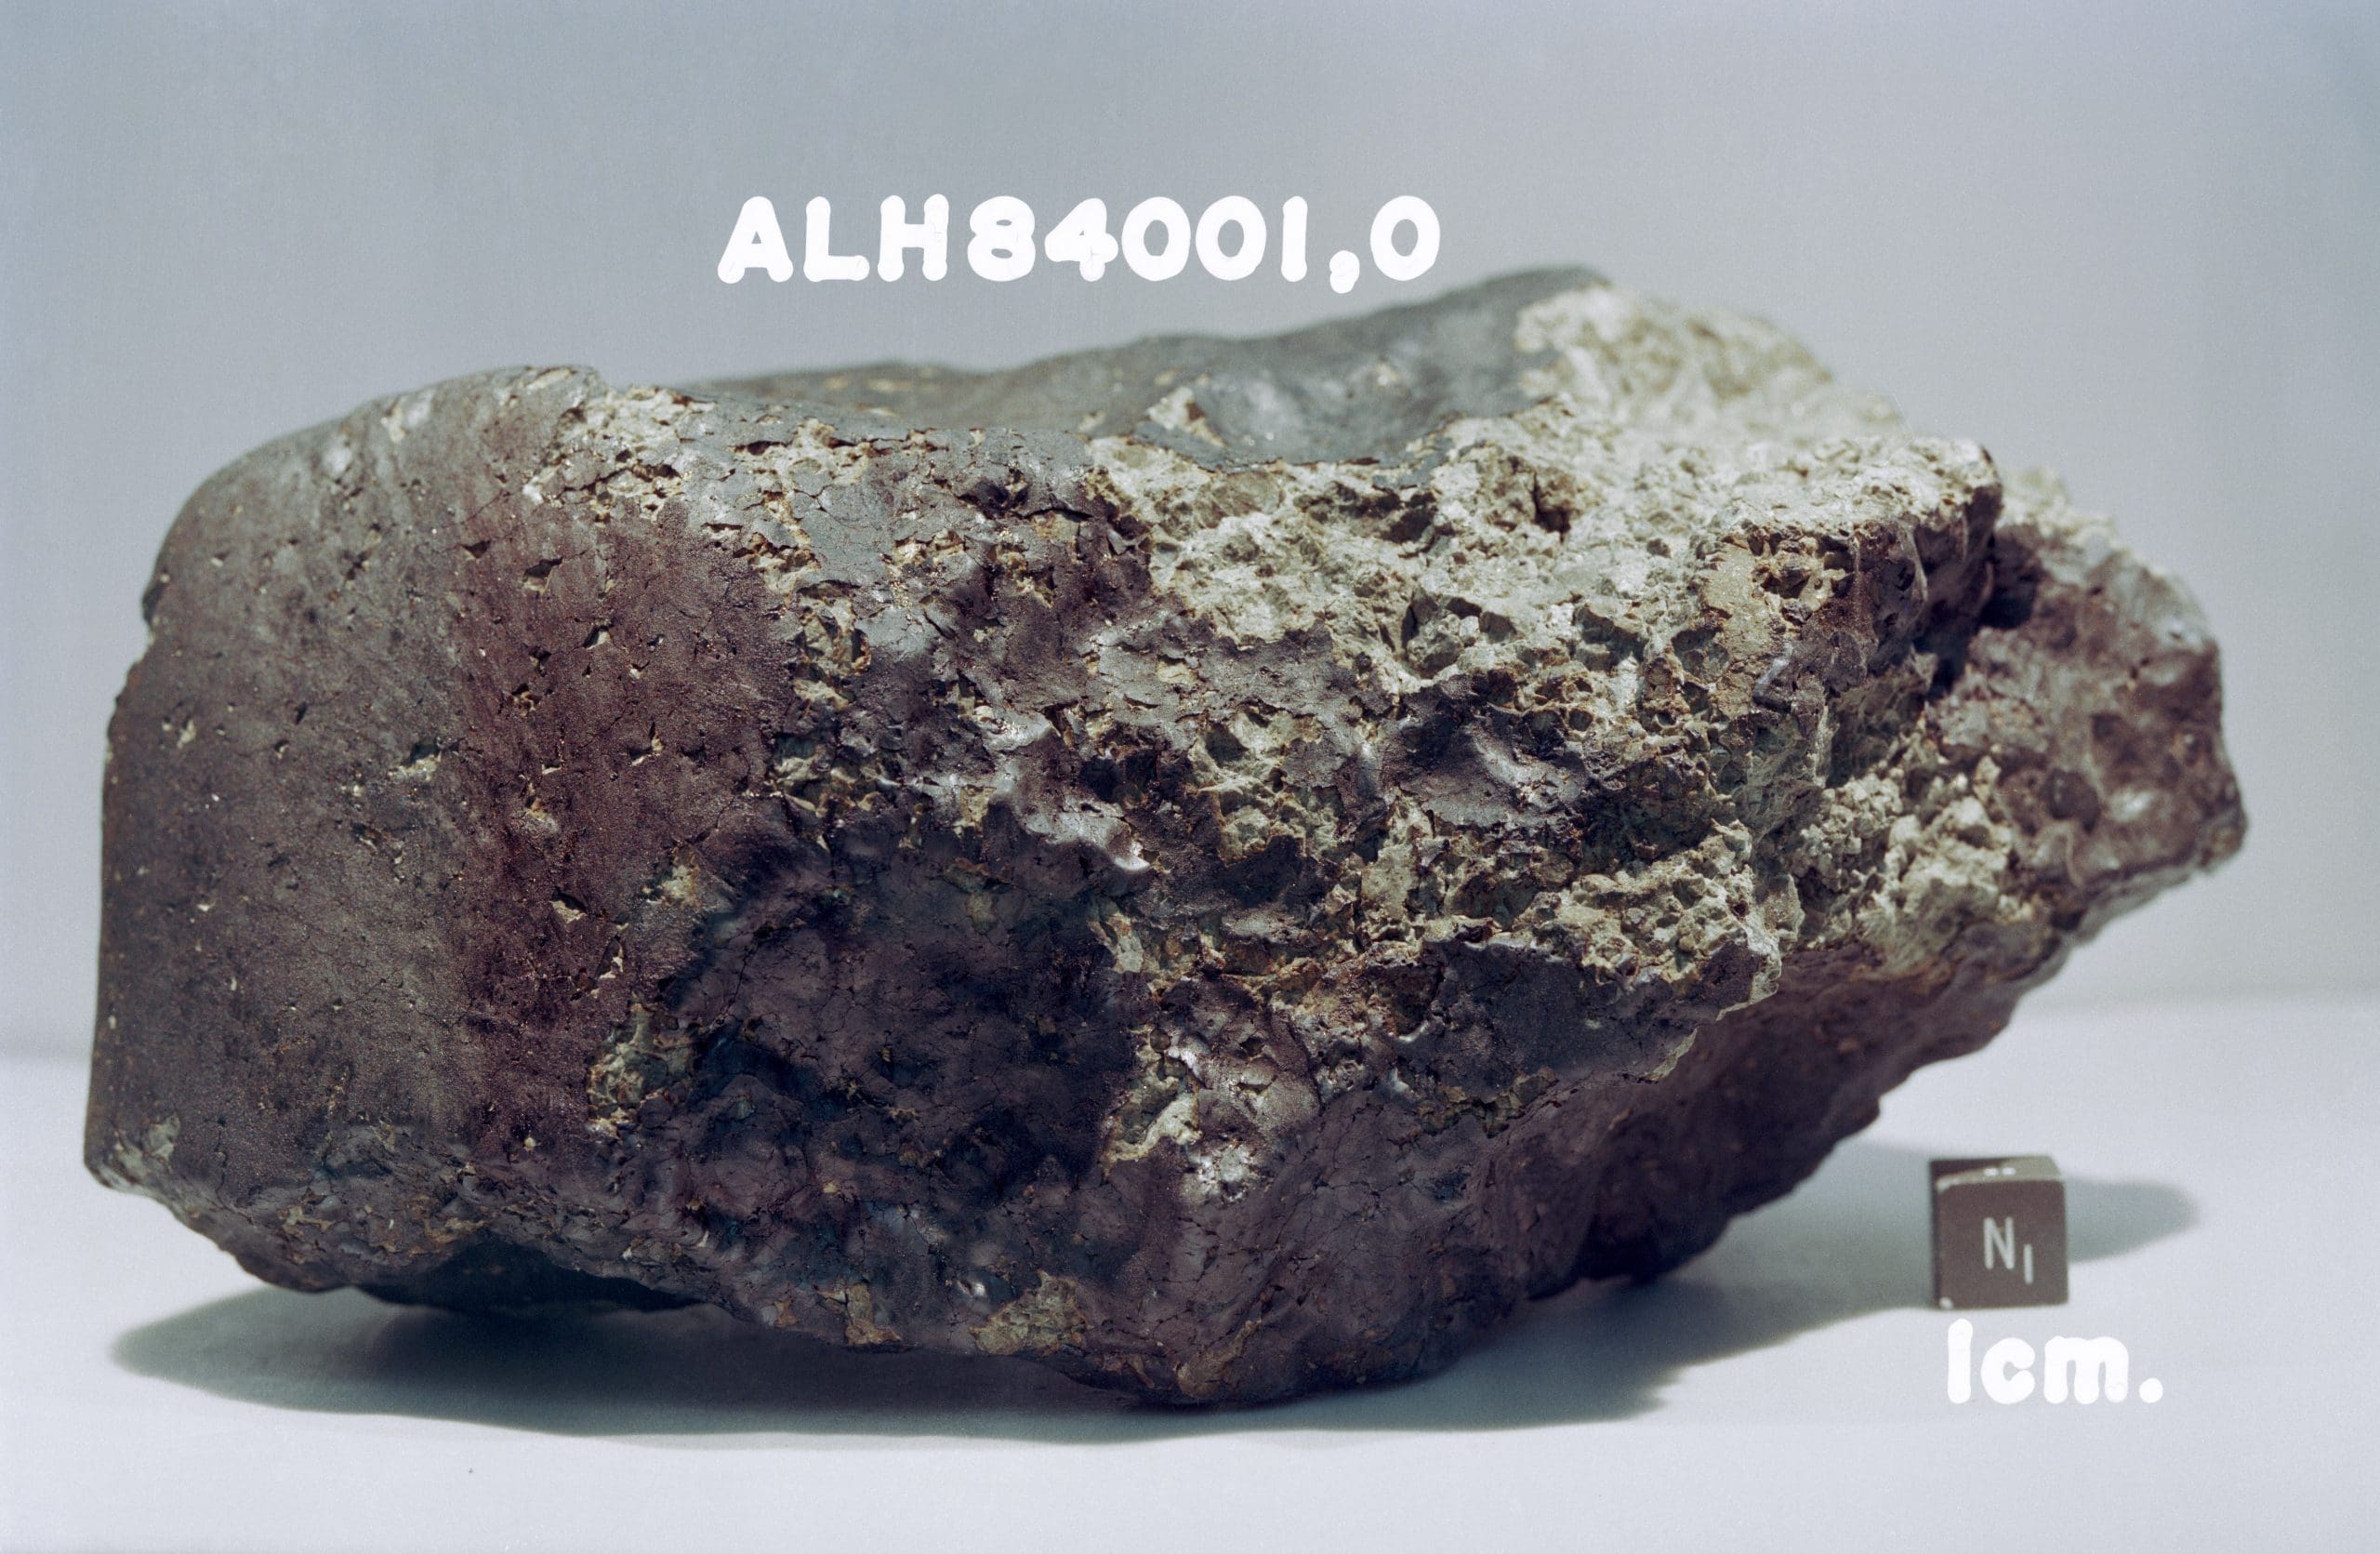 27 de dezembro de 1984 Famoso meteorito de Allan Hills Mars encontrado na Antartida scaled